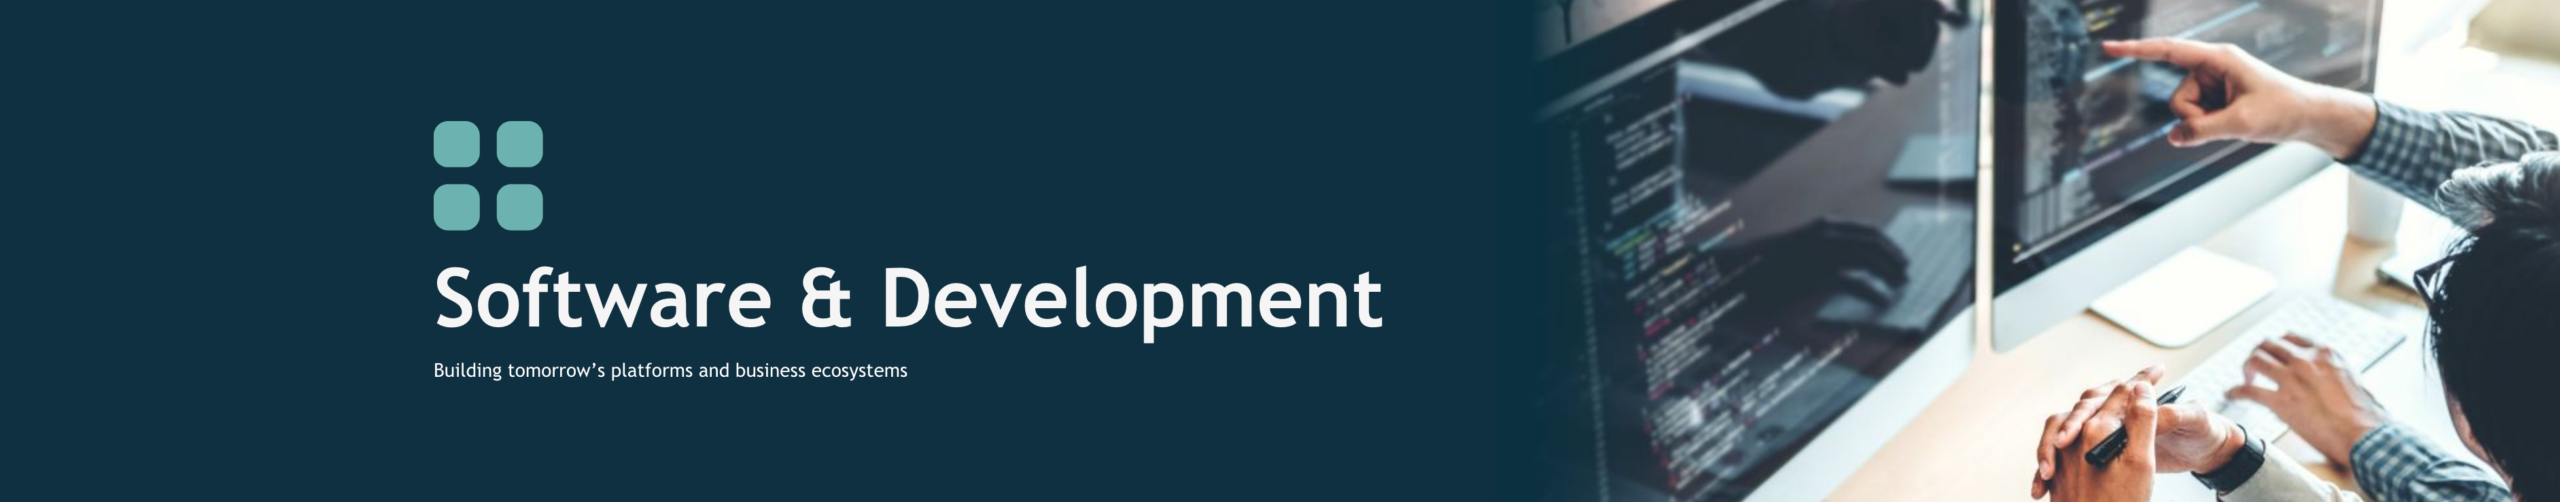 Software & Development Banner Image